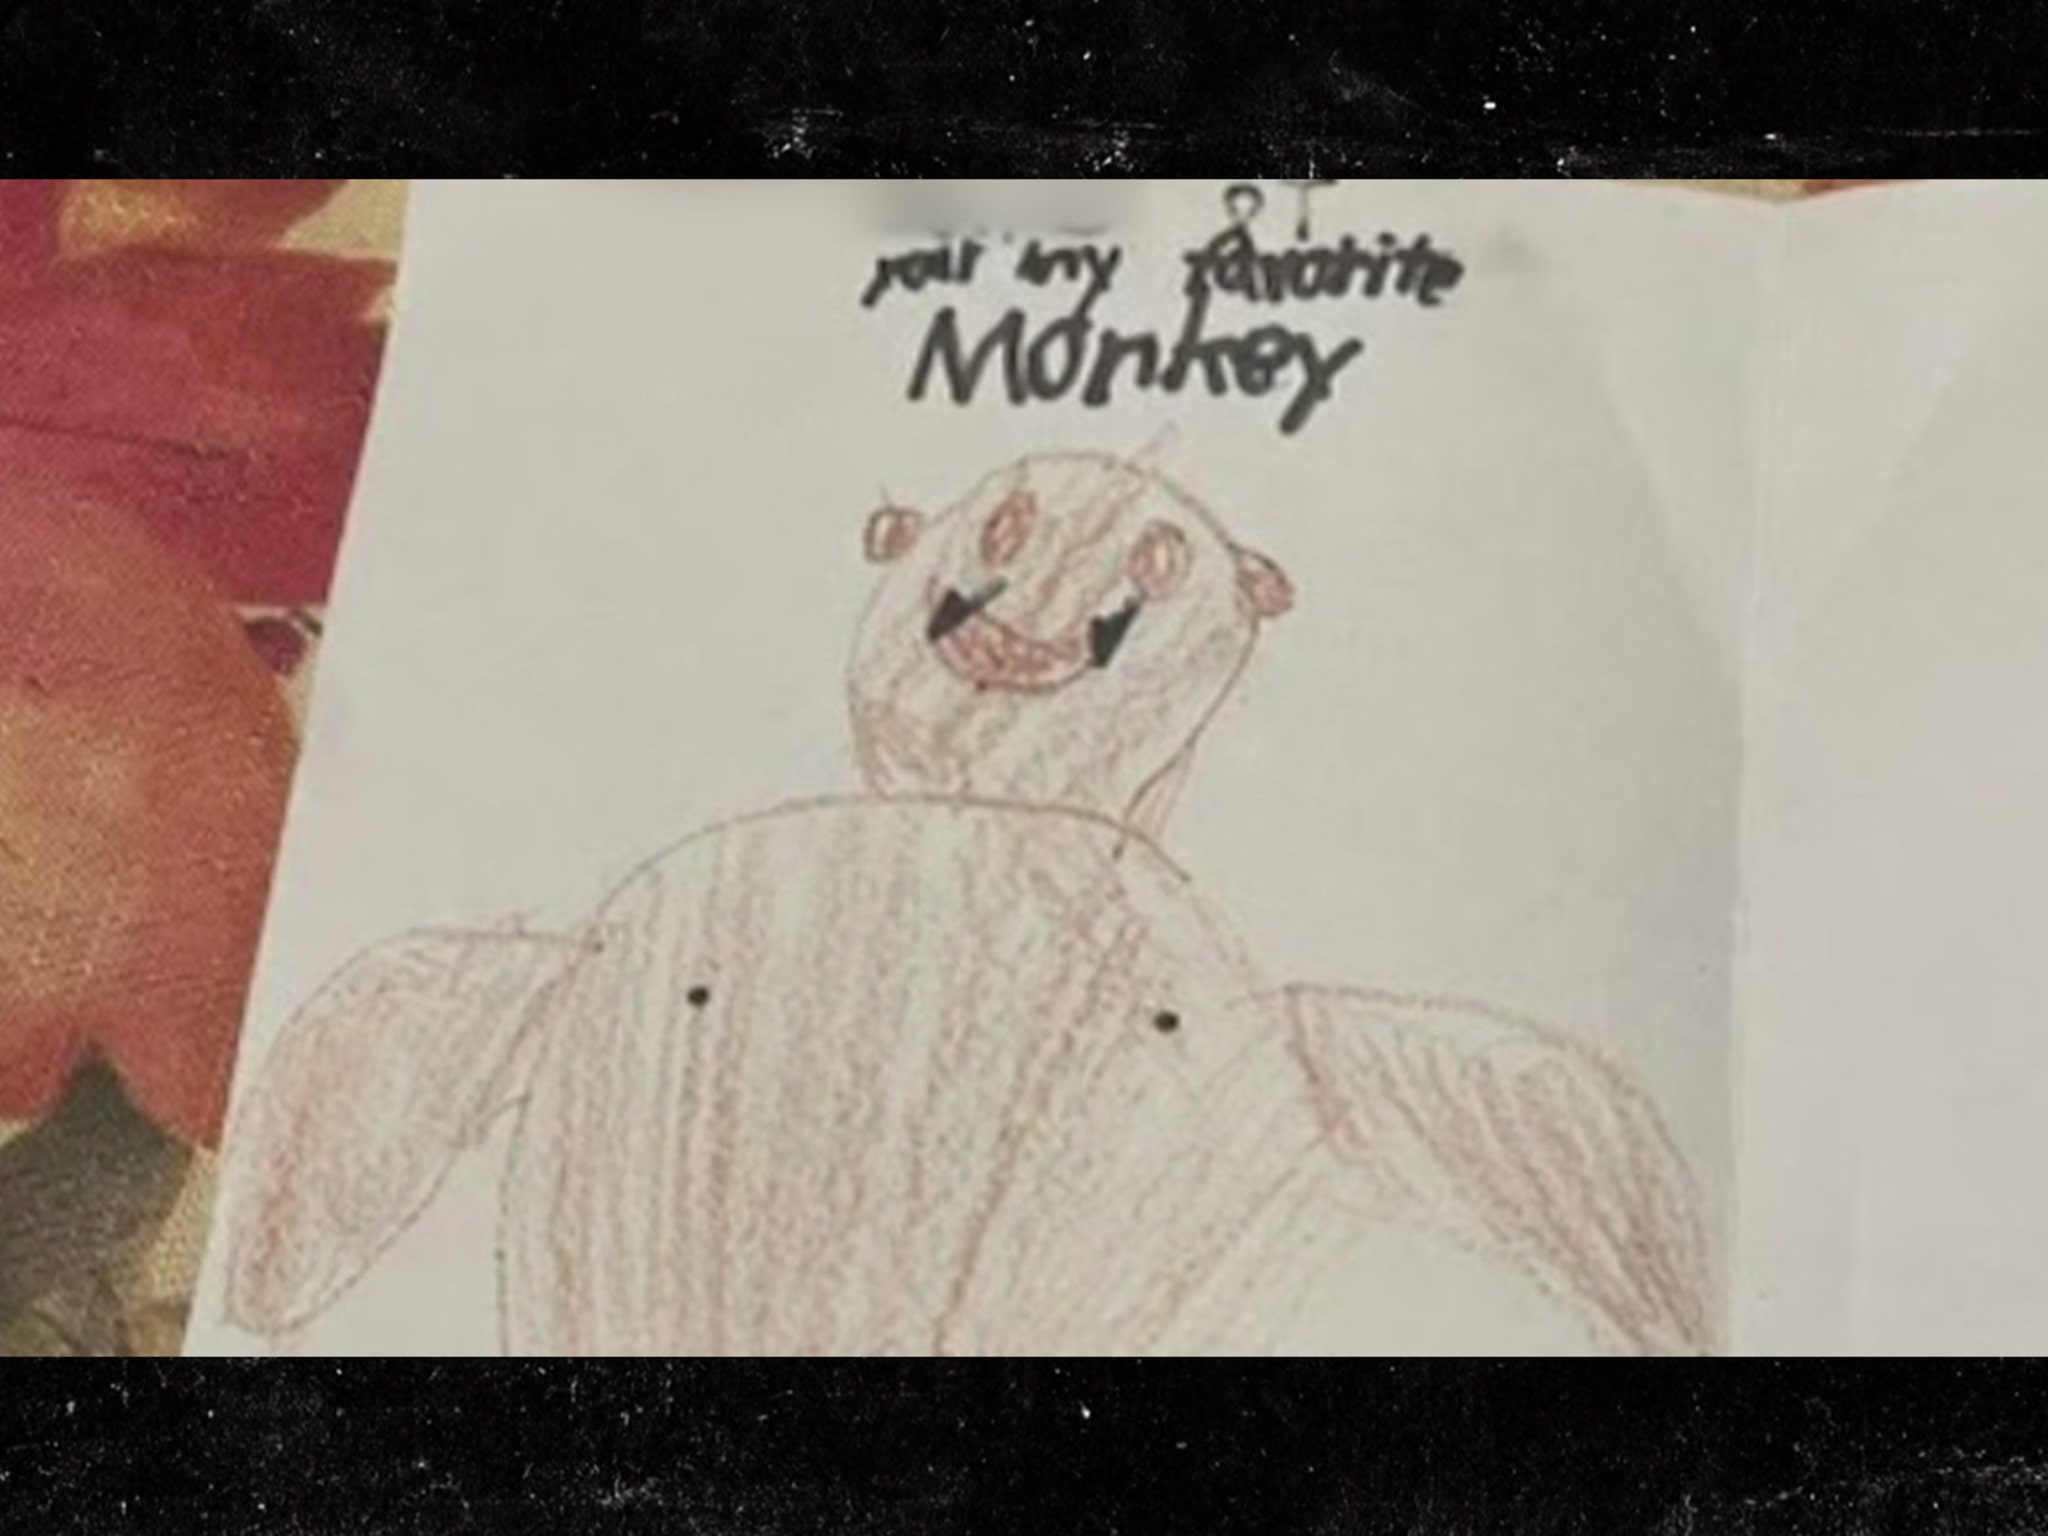 Racist Drawings Like 'You're My Favorite Monkey' Targeted at Black  Elementary School Students